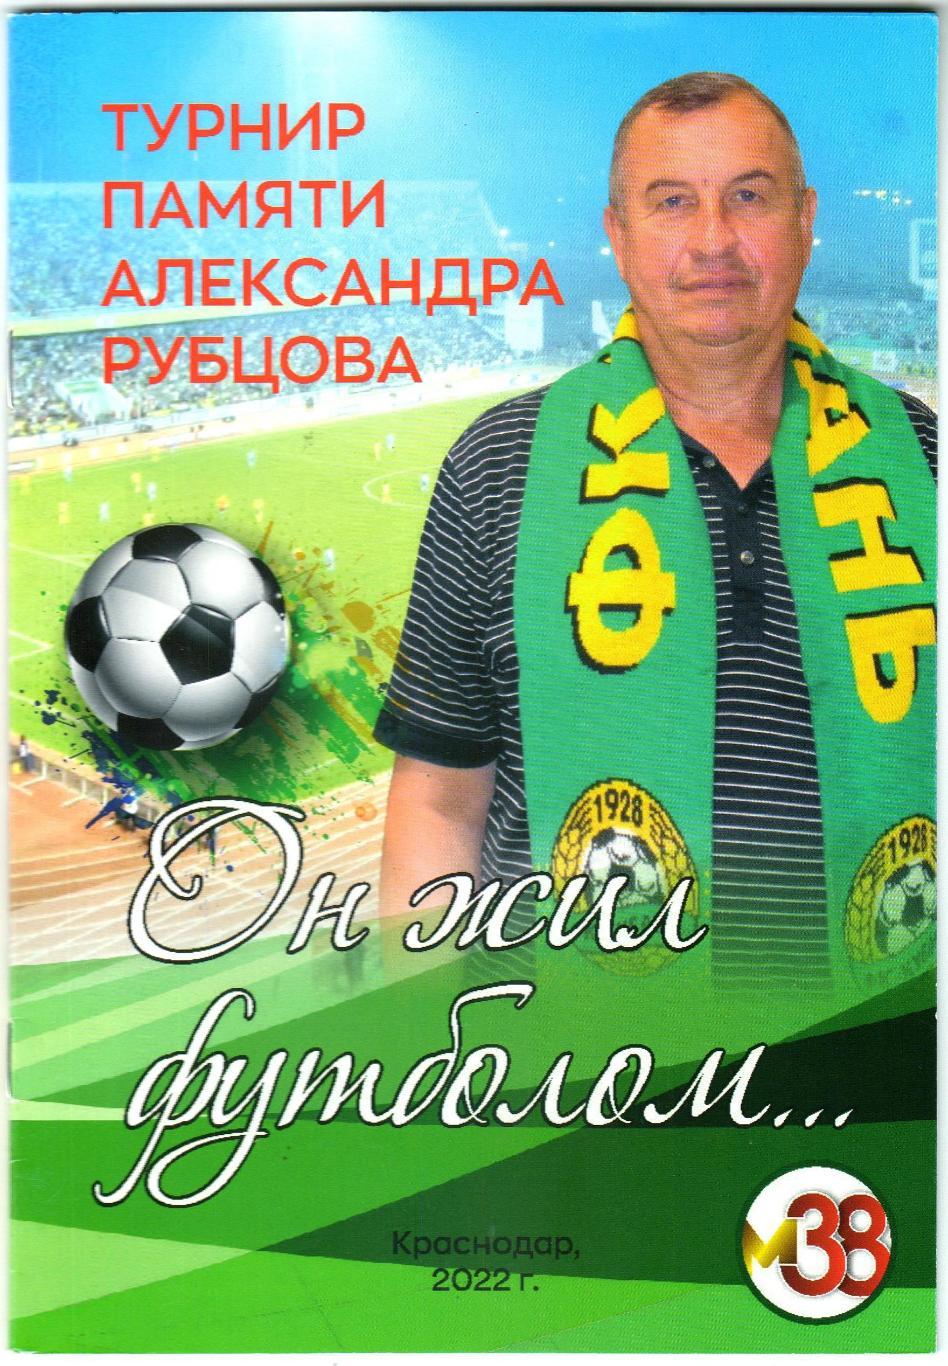 Он жил футболом... Памяти Александра Рубцова (1953–2021) Краснодар 2022